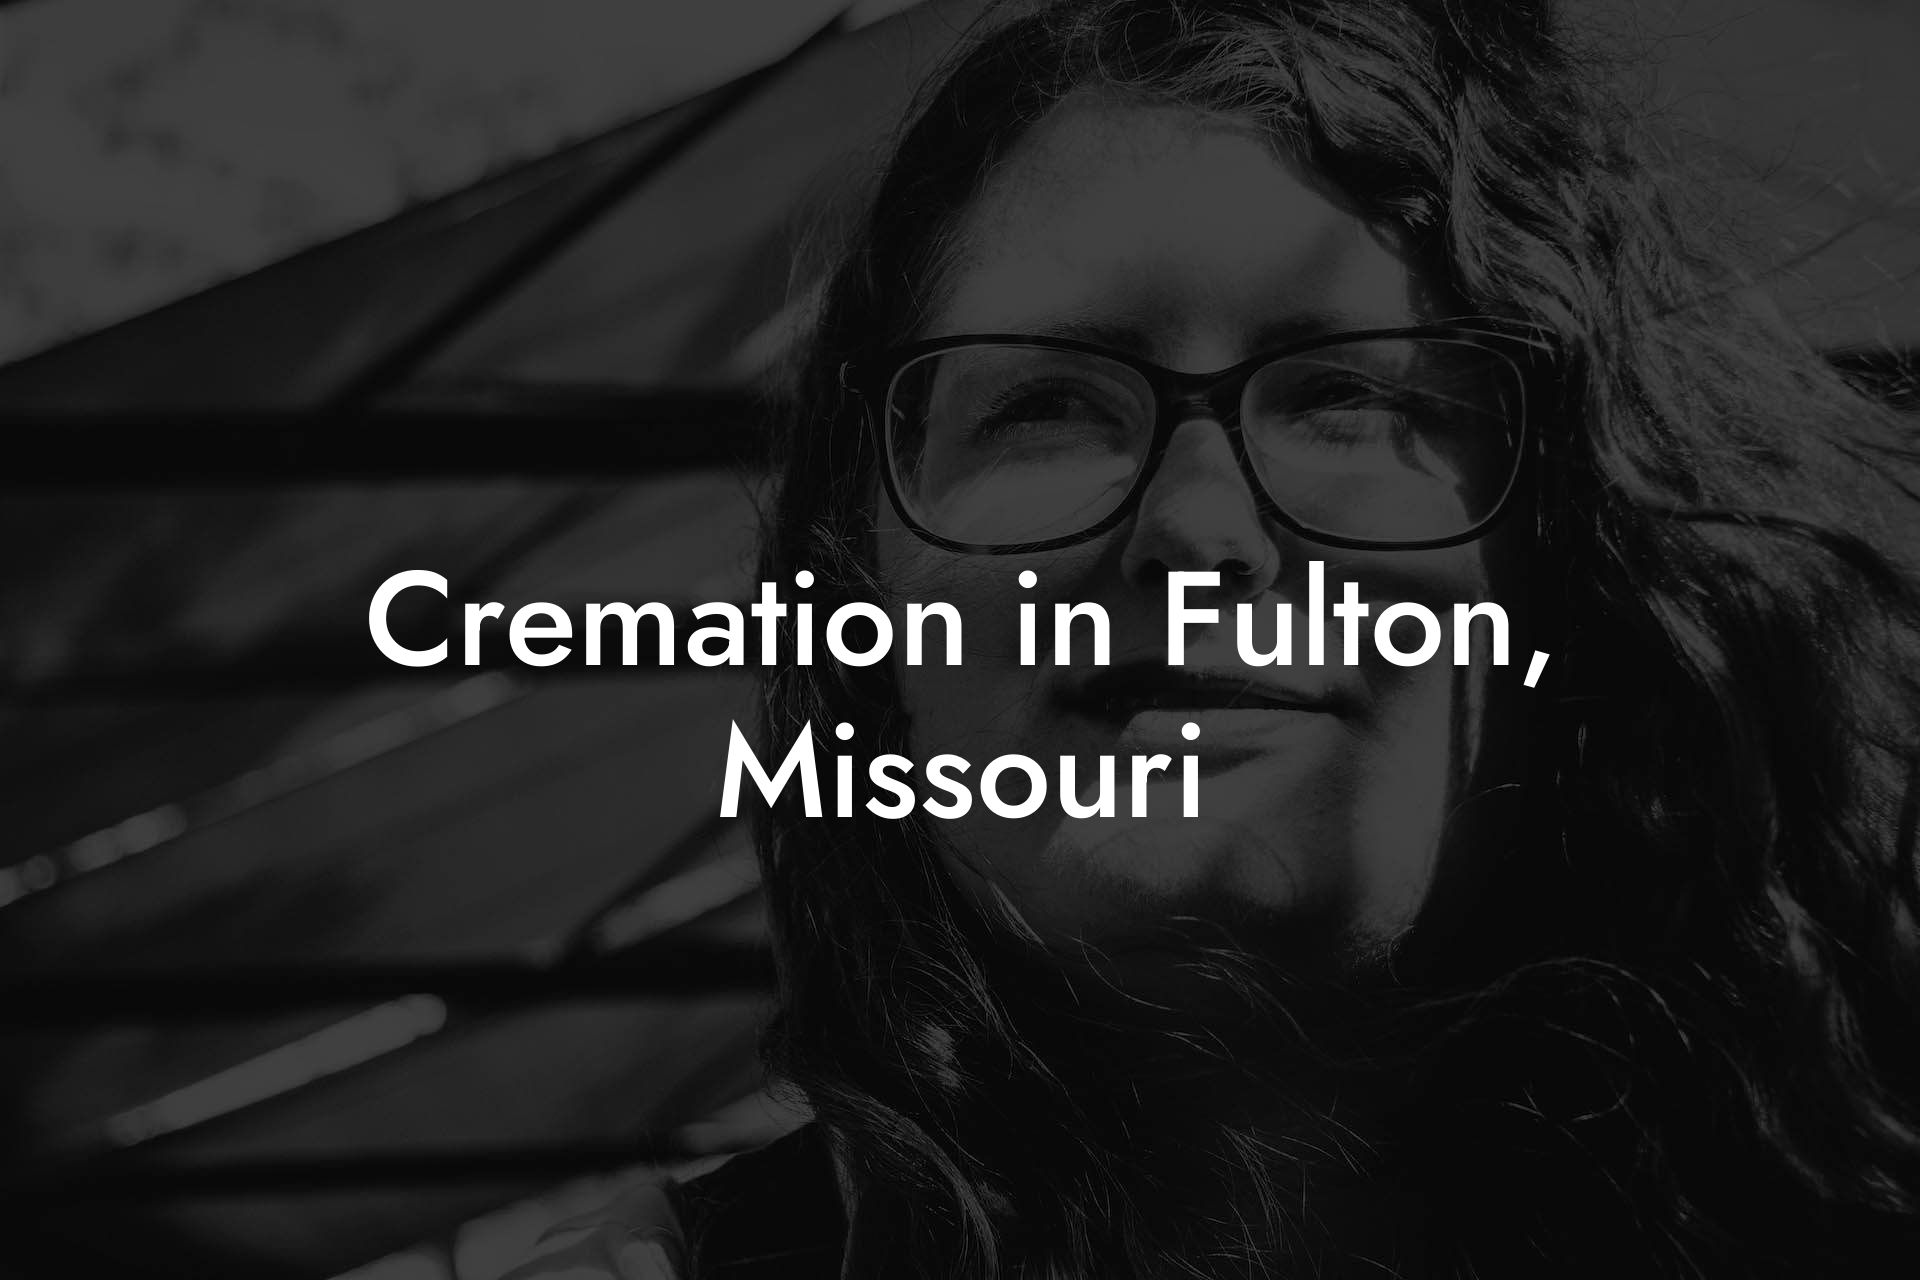 Cremation in Fulton, Missouri